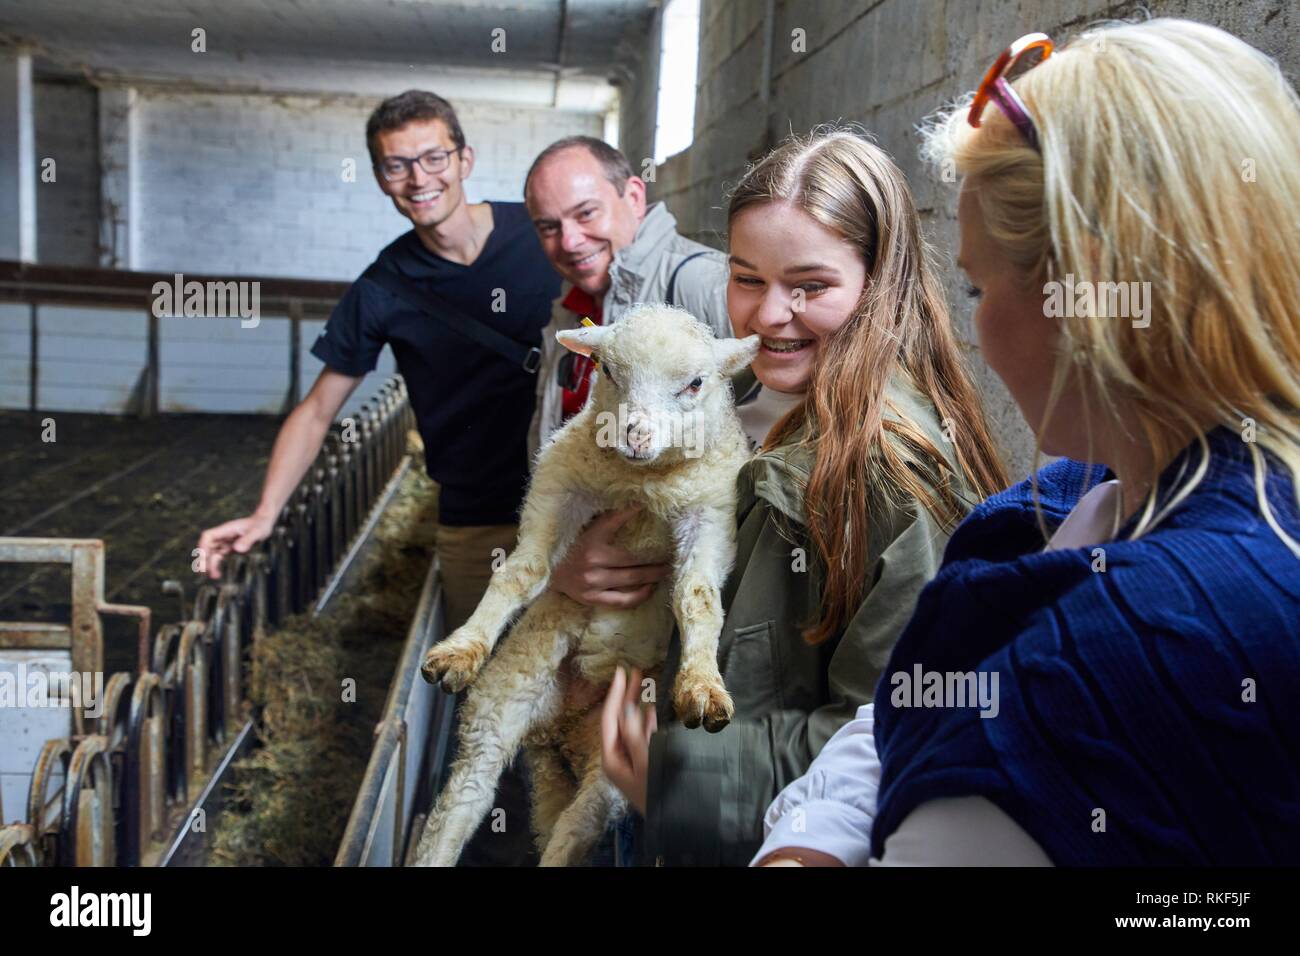 Tour guide with group, Girl with lamb, Caserio Mausitxa, Elgoibar, Gipuzkoa, Basque Country, Spain, Europe Stock Photo